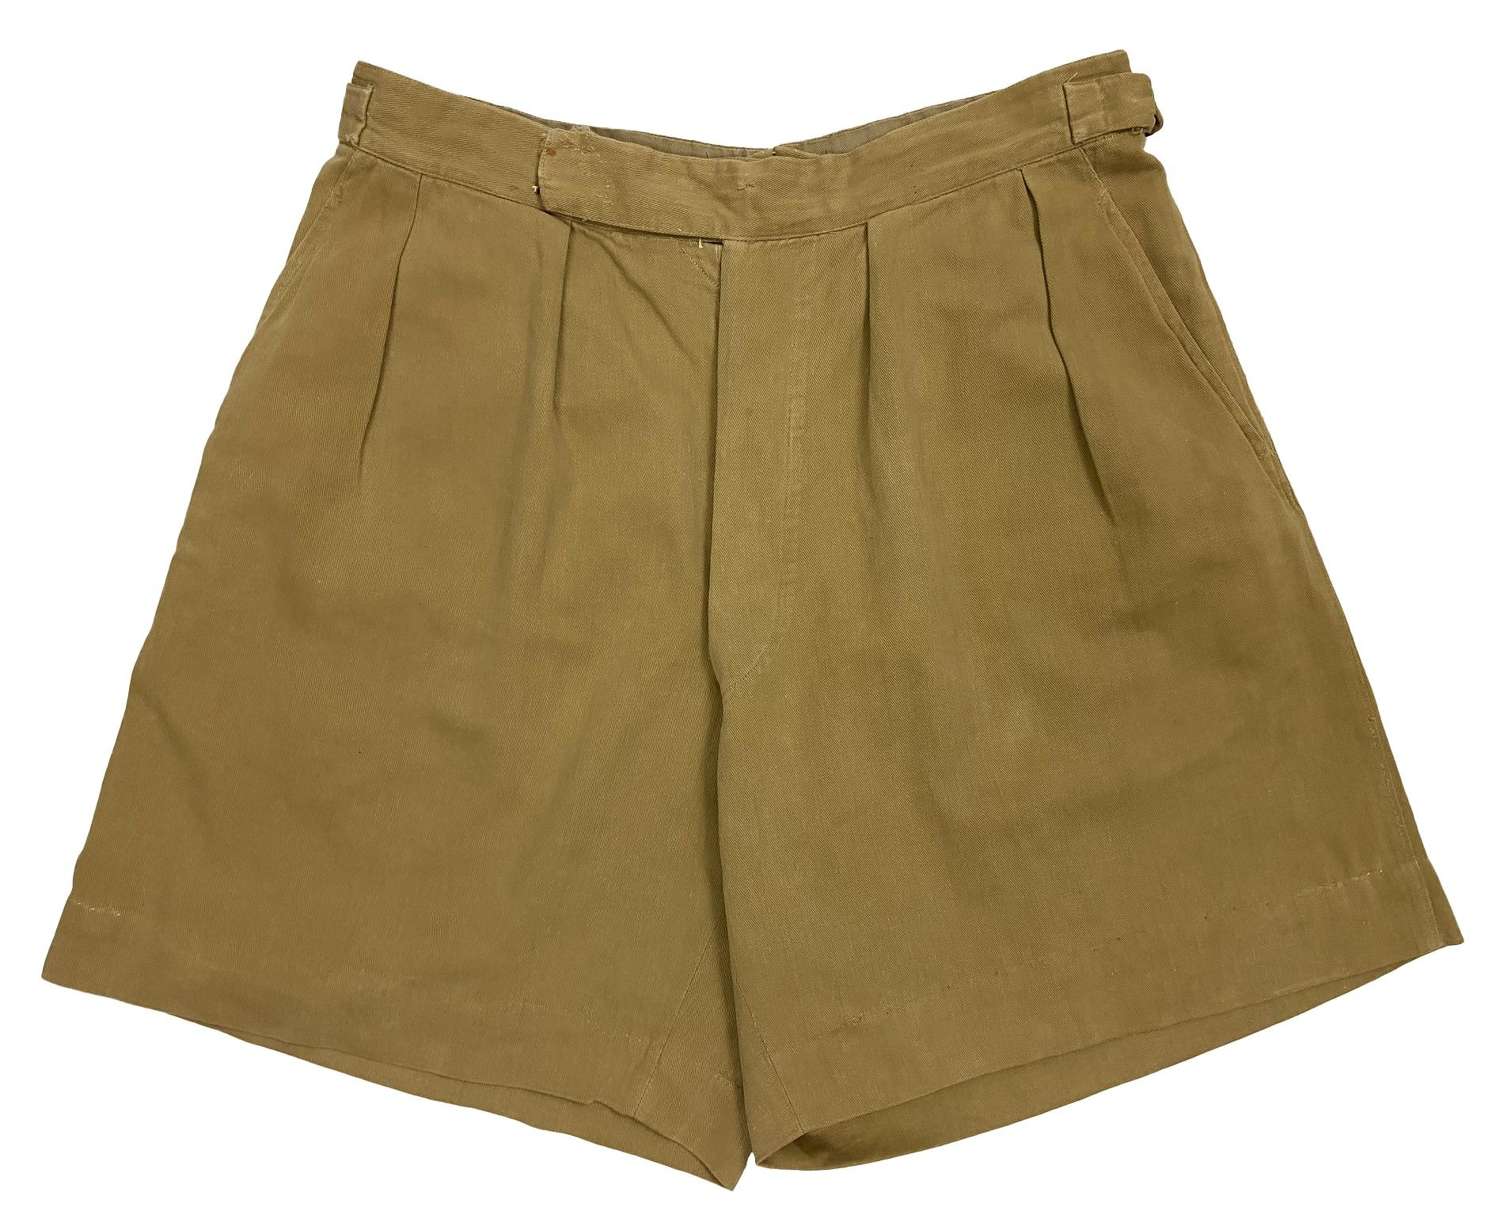 Original 1940s Khaki Drill Shorts